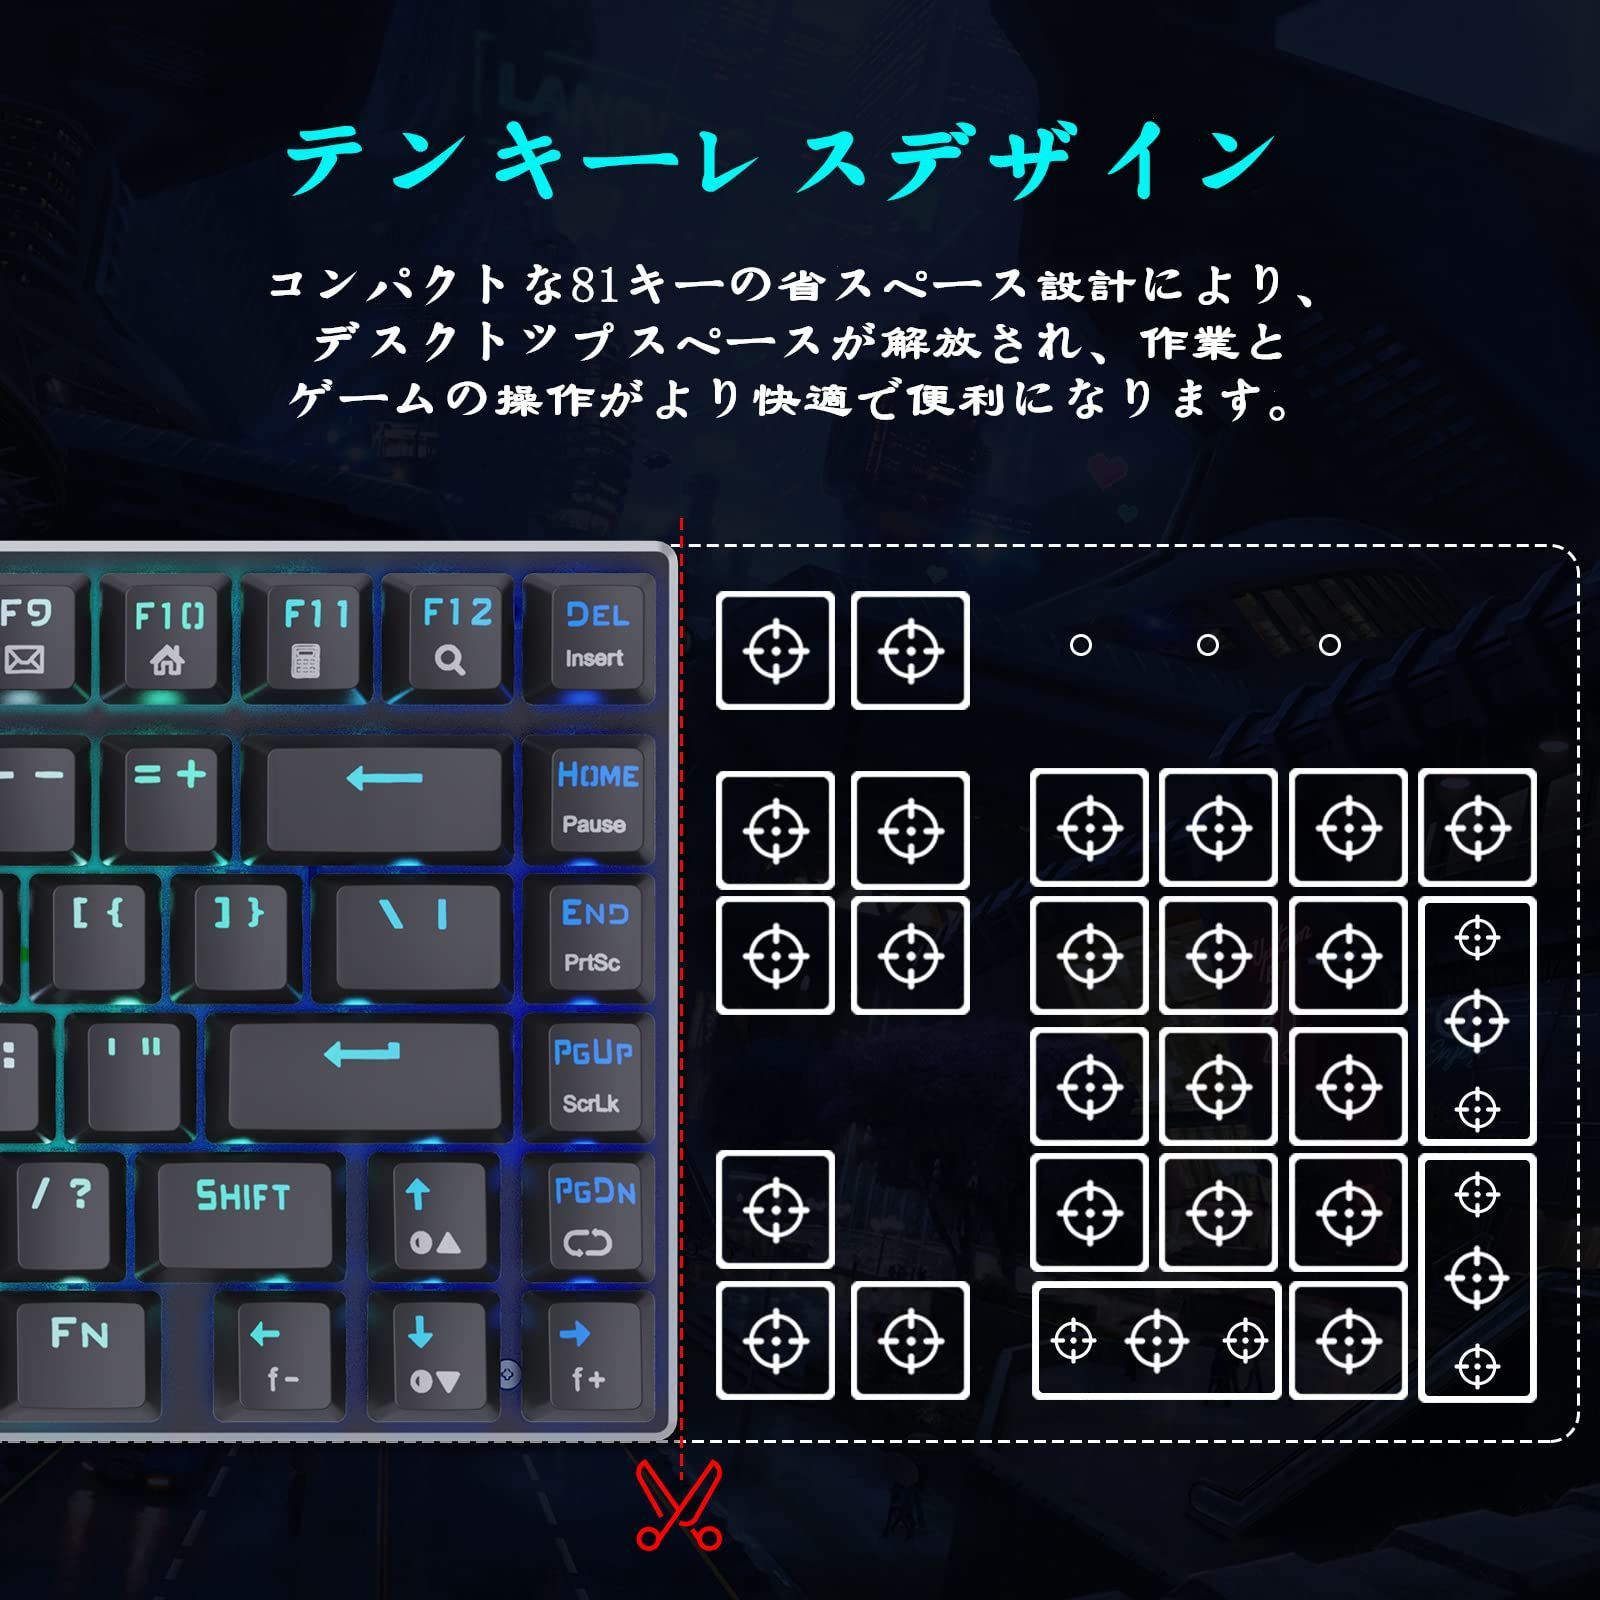 PC/タブレット【色:青軸・ピンク】e元素ゲーミングキーボード81キー 青軸を採用のメカニカルキ